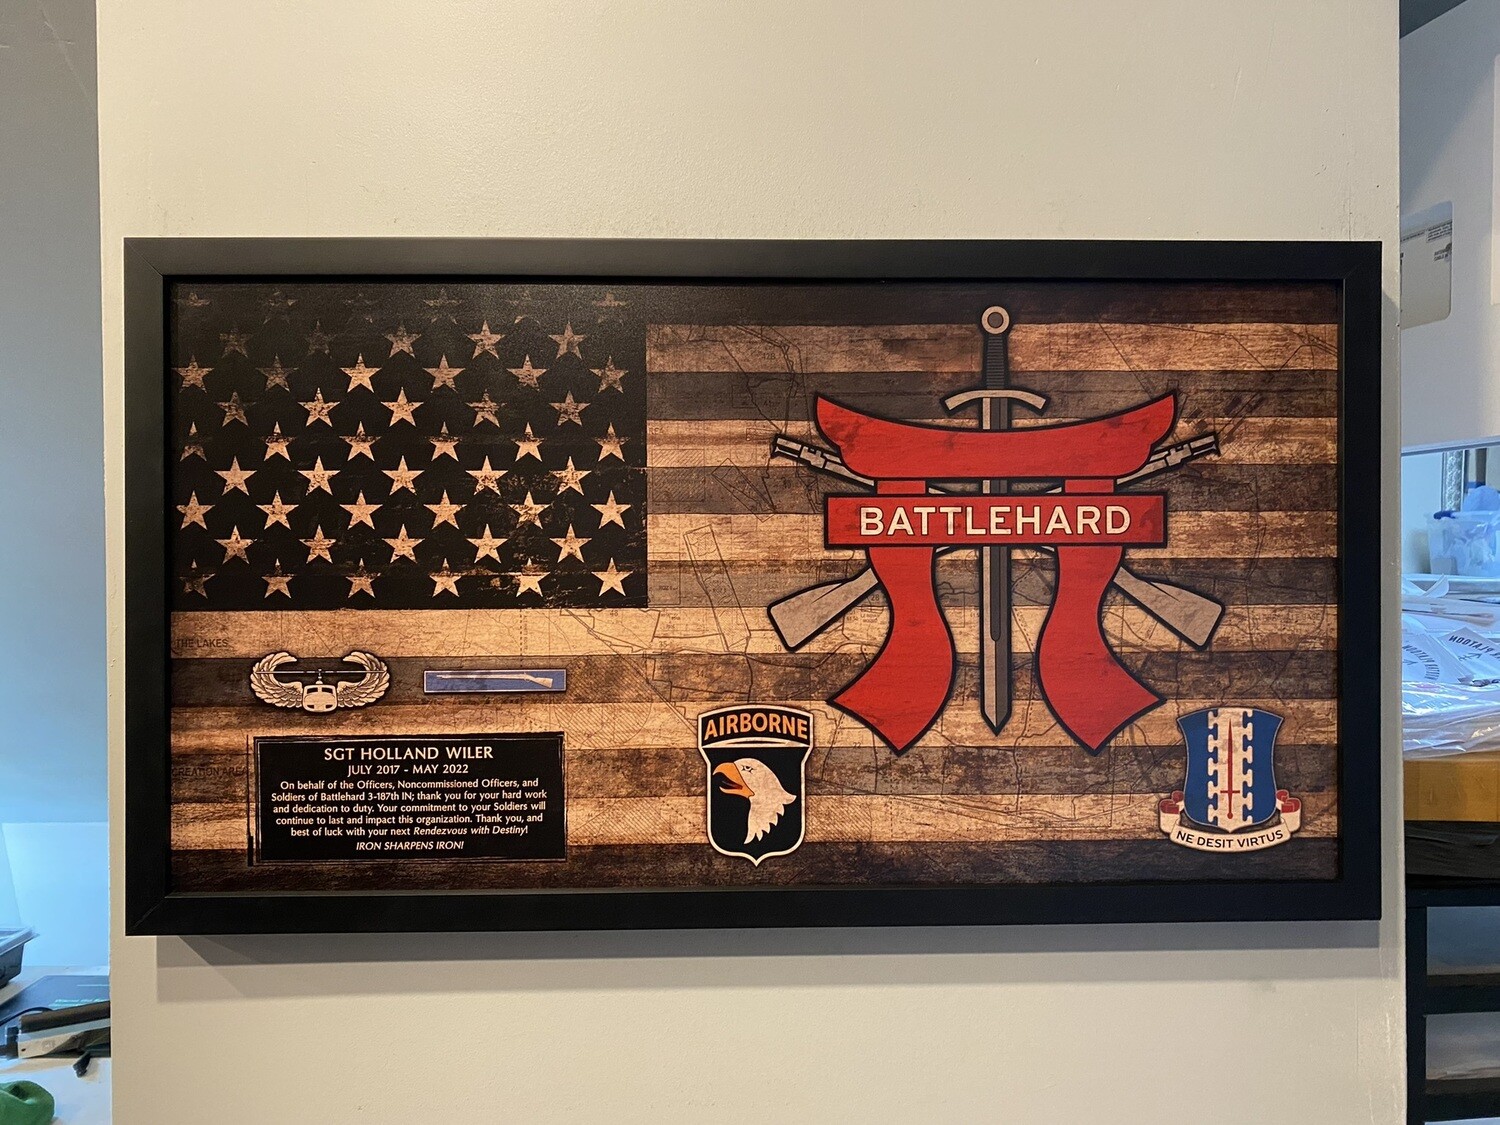 B Co "Battlehard" 3-187 IN Rustic Flag Plaque - 28.25"x15.25"